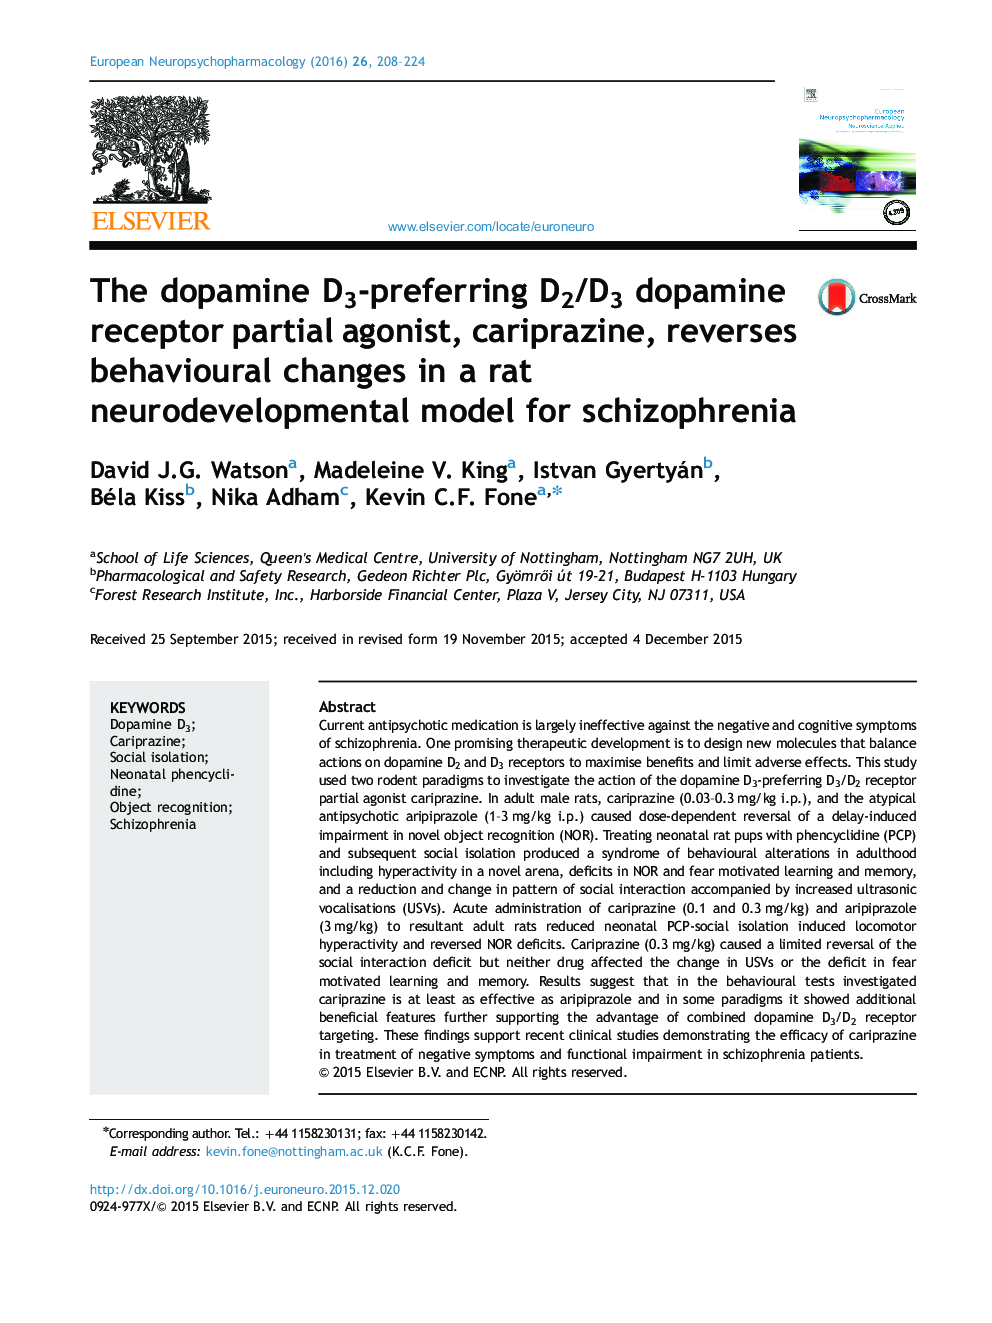 The dopamine D3-preferring D2/D3 dopamine receptor partial agonist, cariprazine, reverses behavioural changes in a rat neurodevelopmental model for schizophrenia